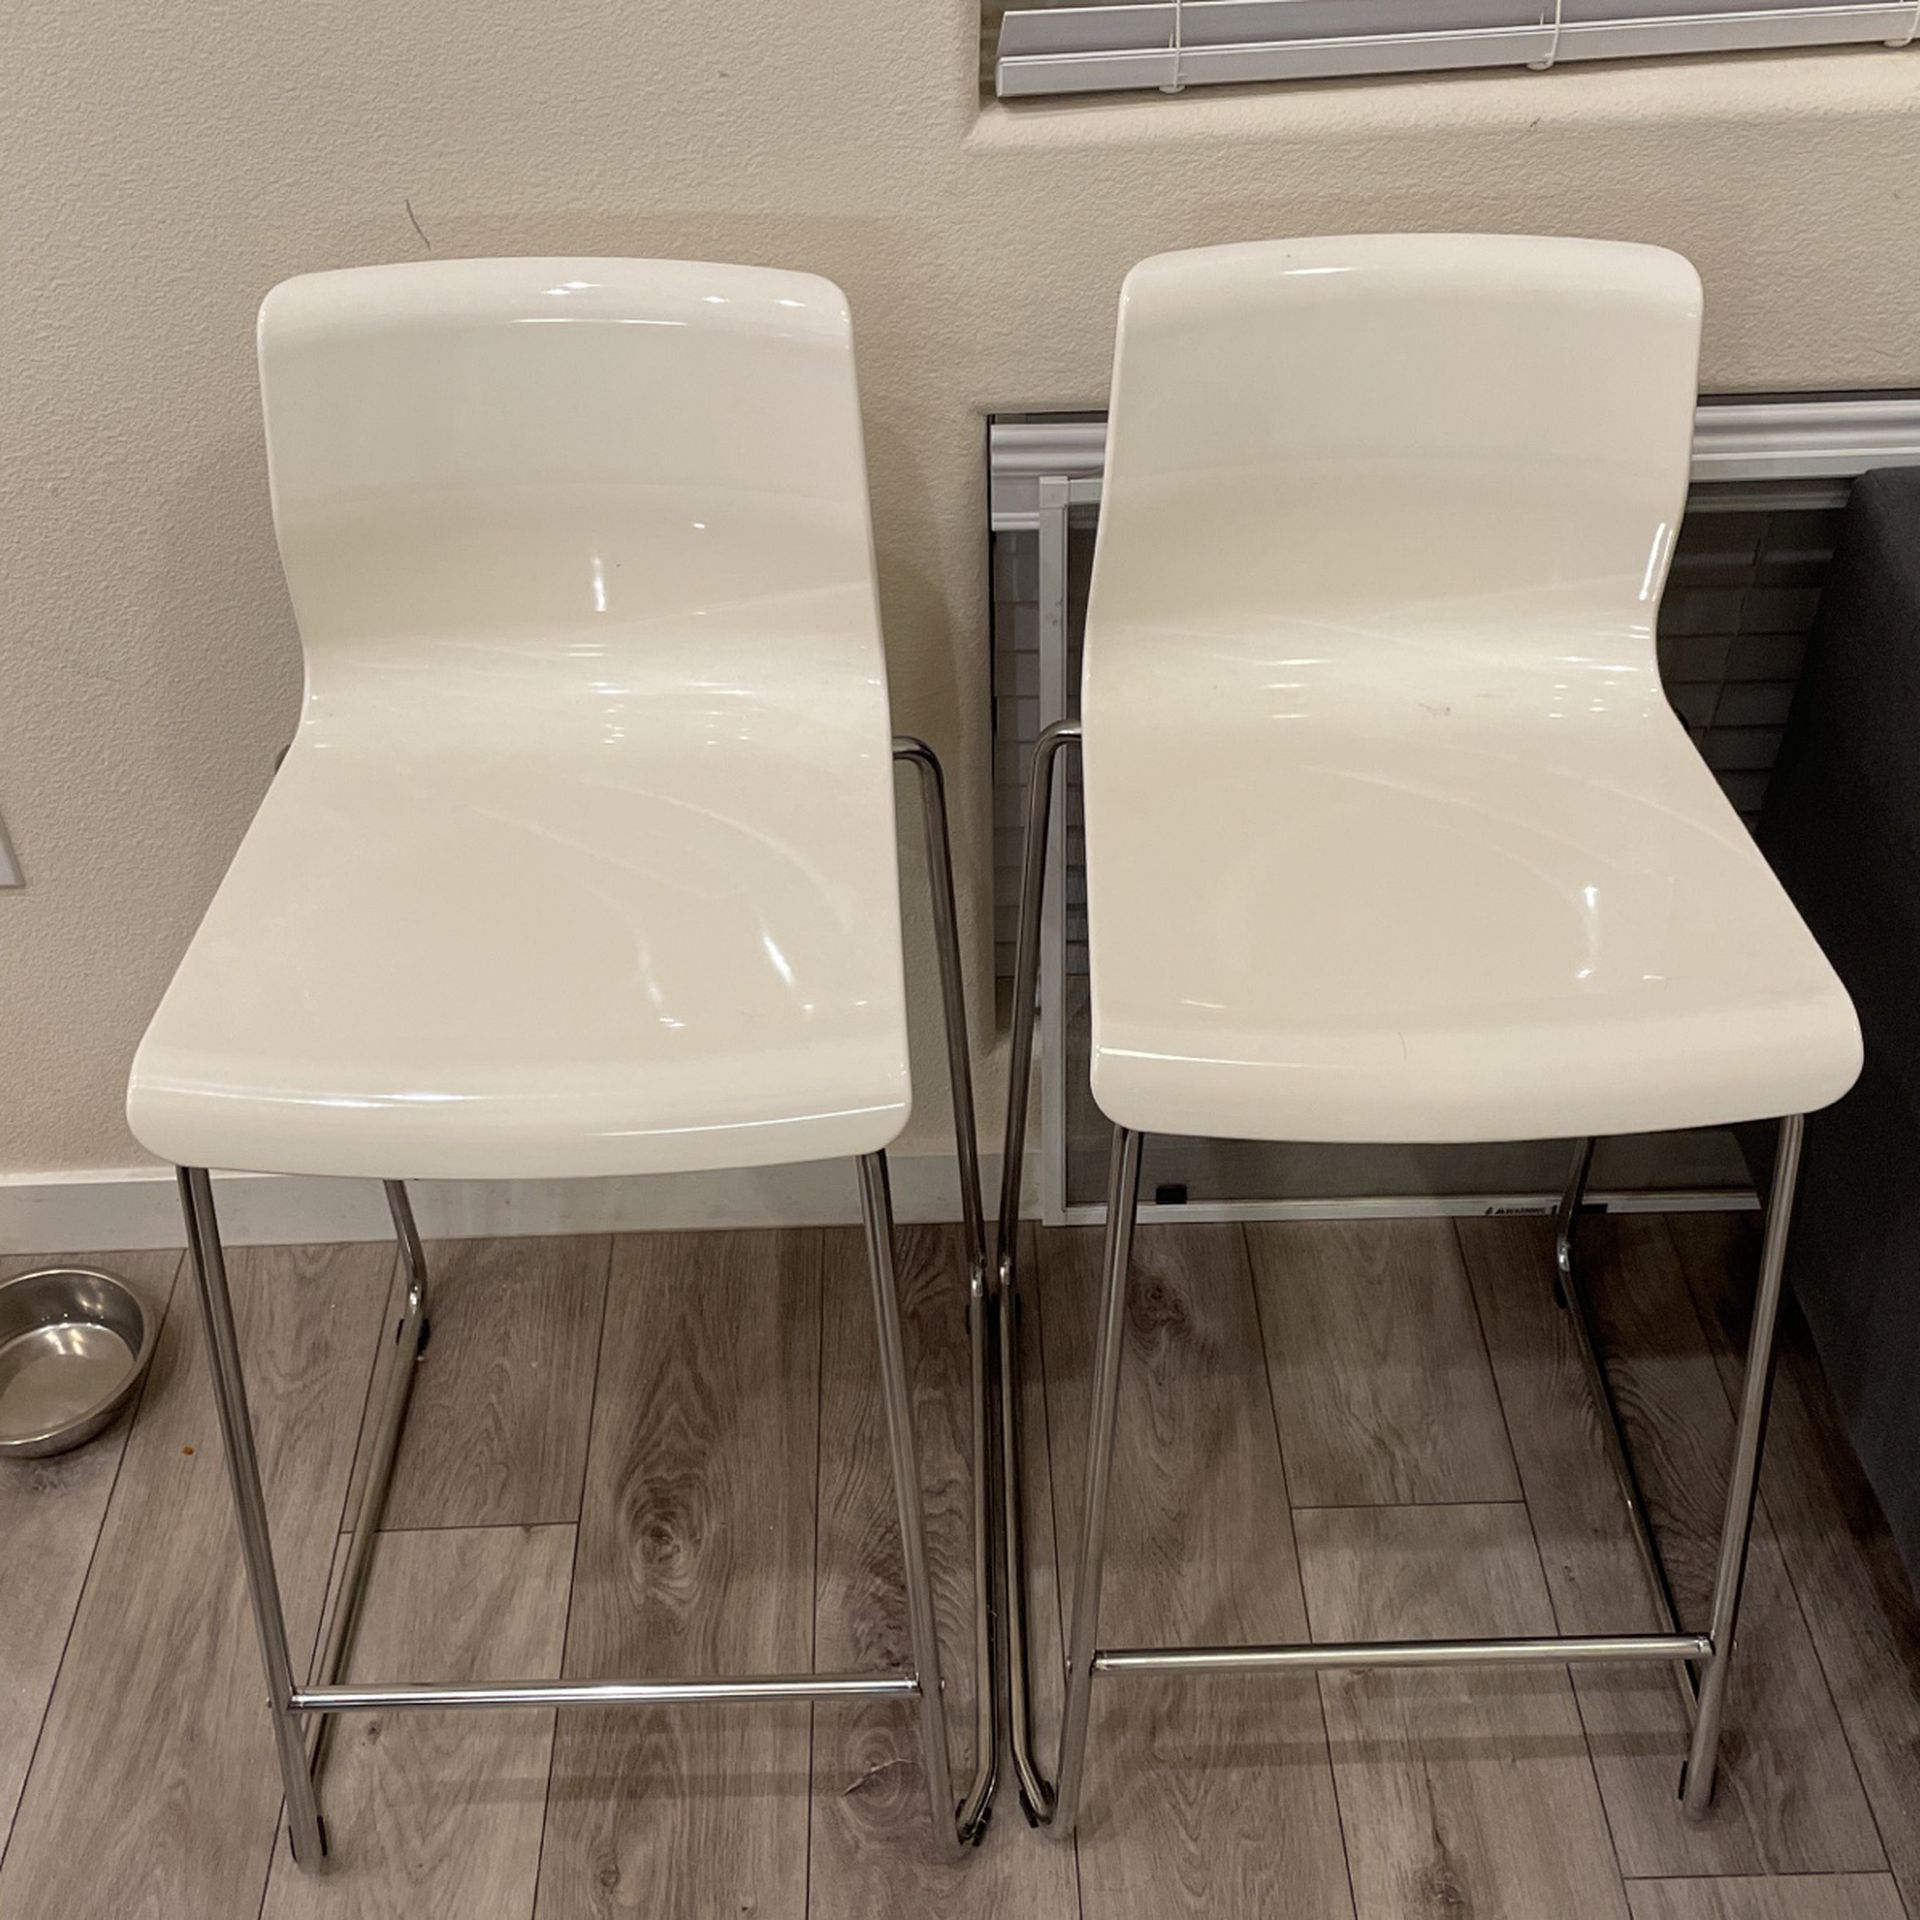 Two IKEA white high chair